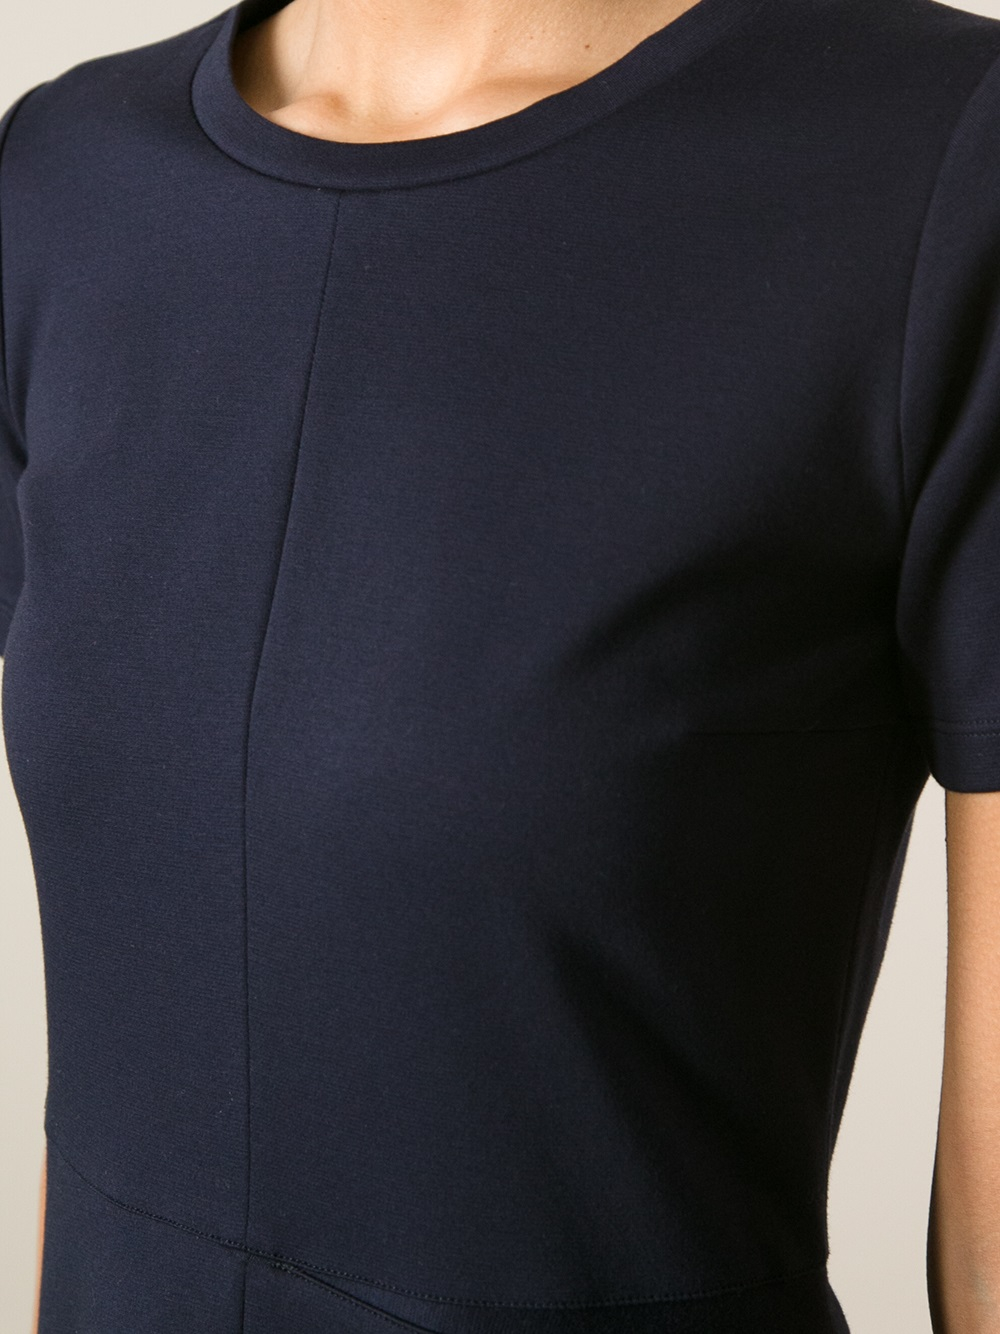 Jil sander navy T-shirt Dress in Blue | Lyst